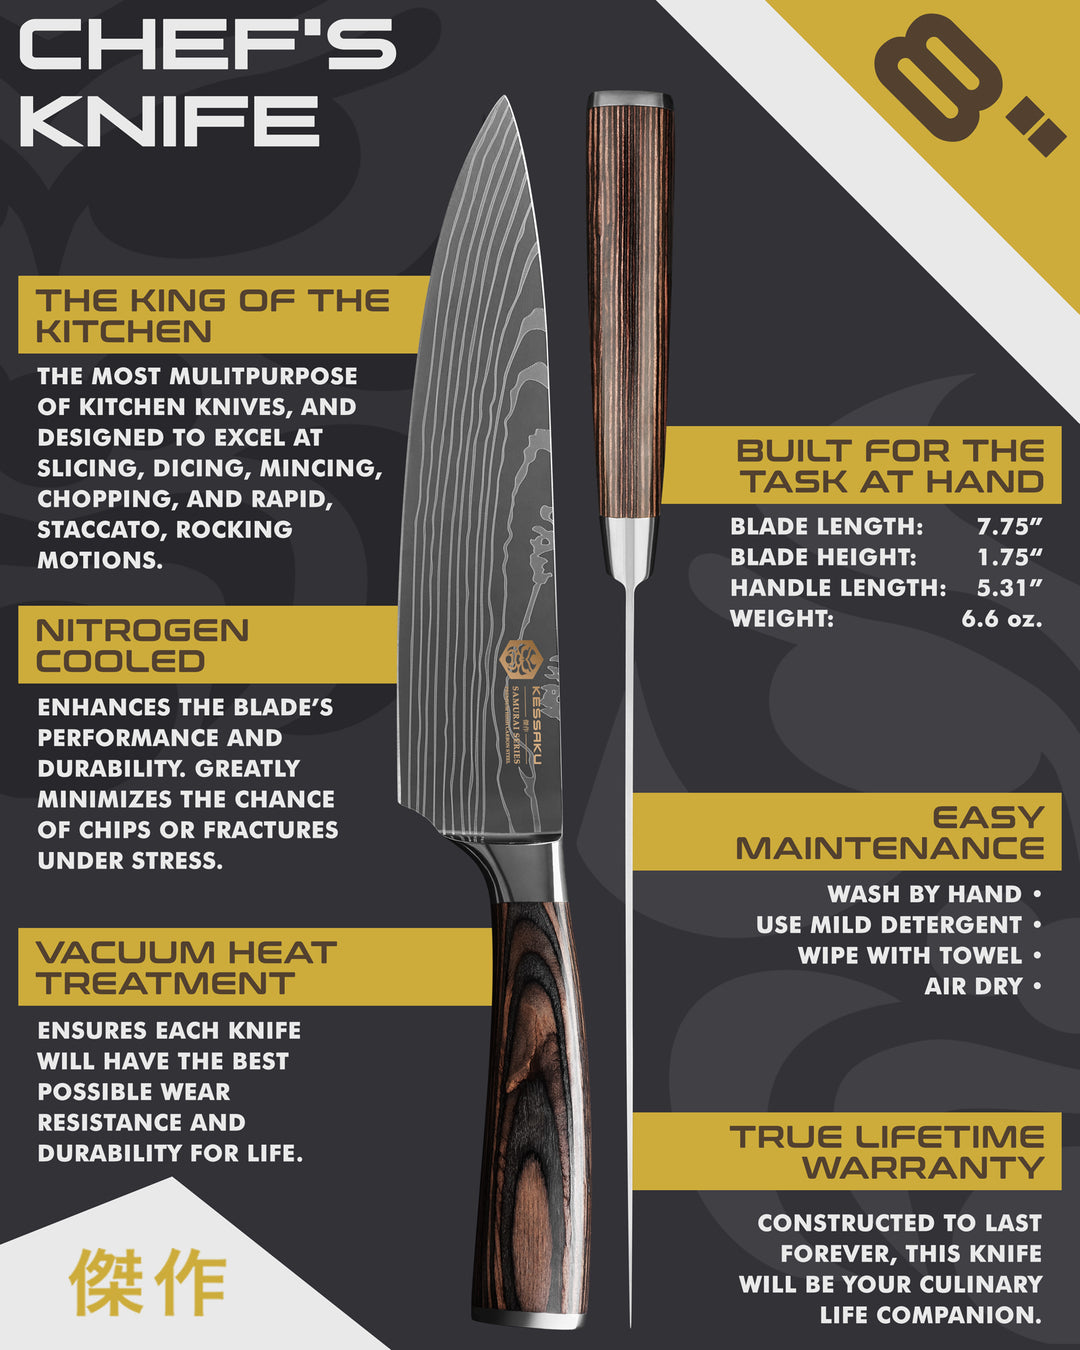 Kessaku Samurai Series Chef's Knife uses, dimensions, maintenance, warranty info, and additional blade treatments